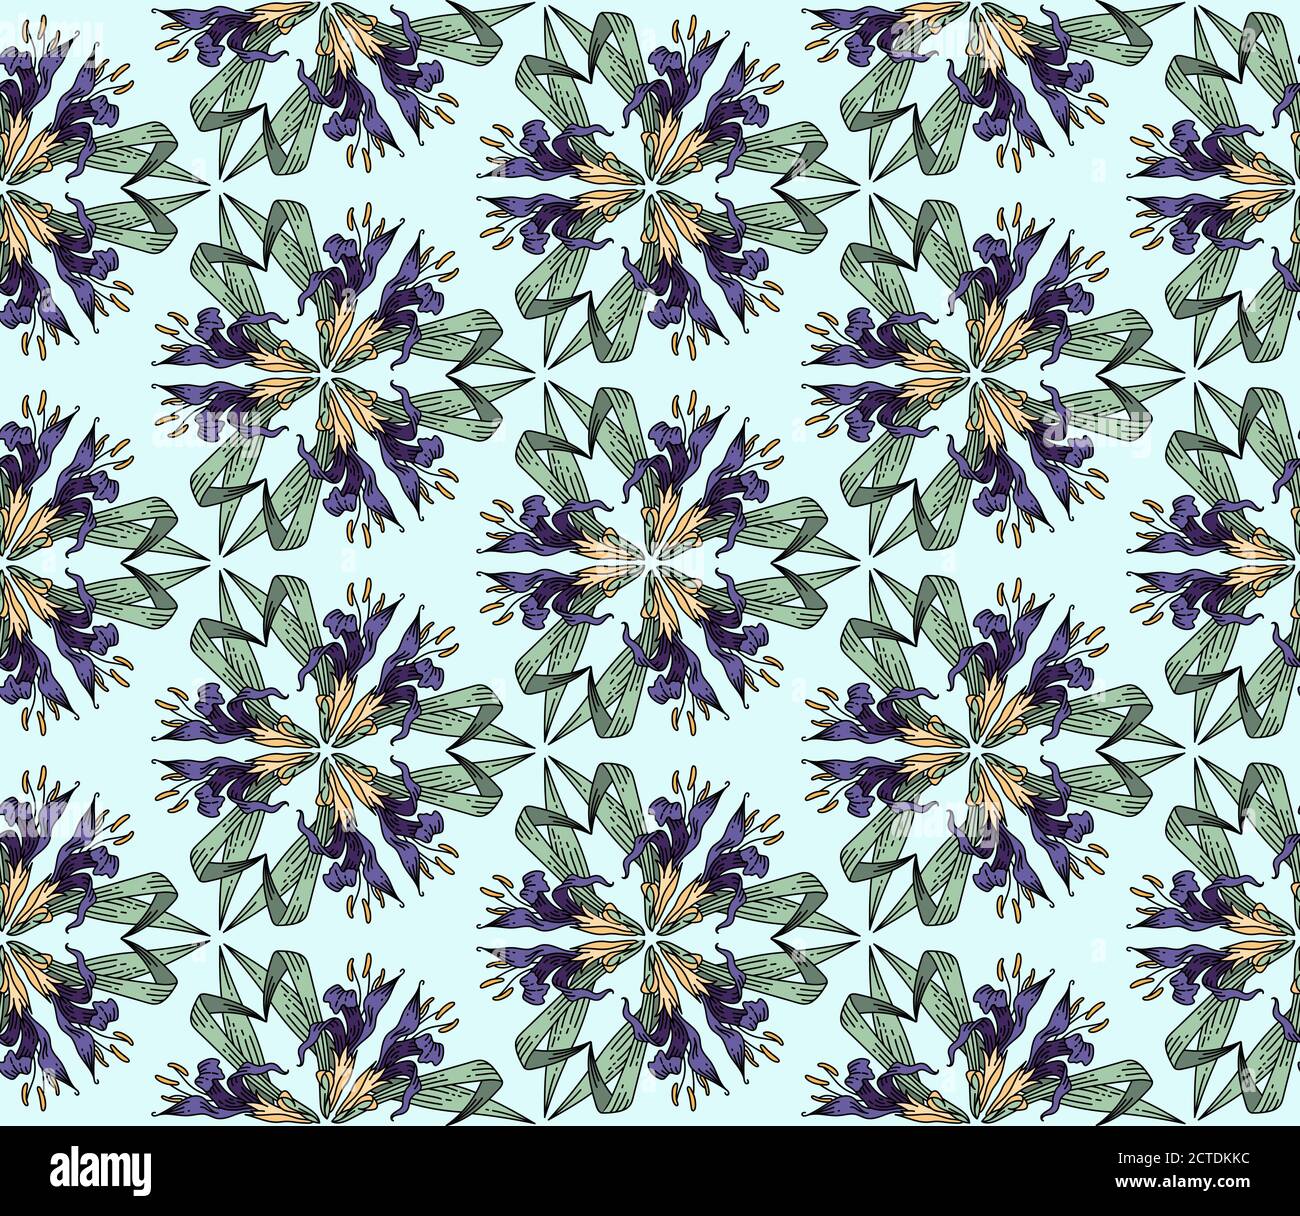 Irises vector seamless pattern as art nouveau botanical endless texture wallpaper or textile tile ornament in retro style. Stock Vector